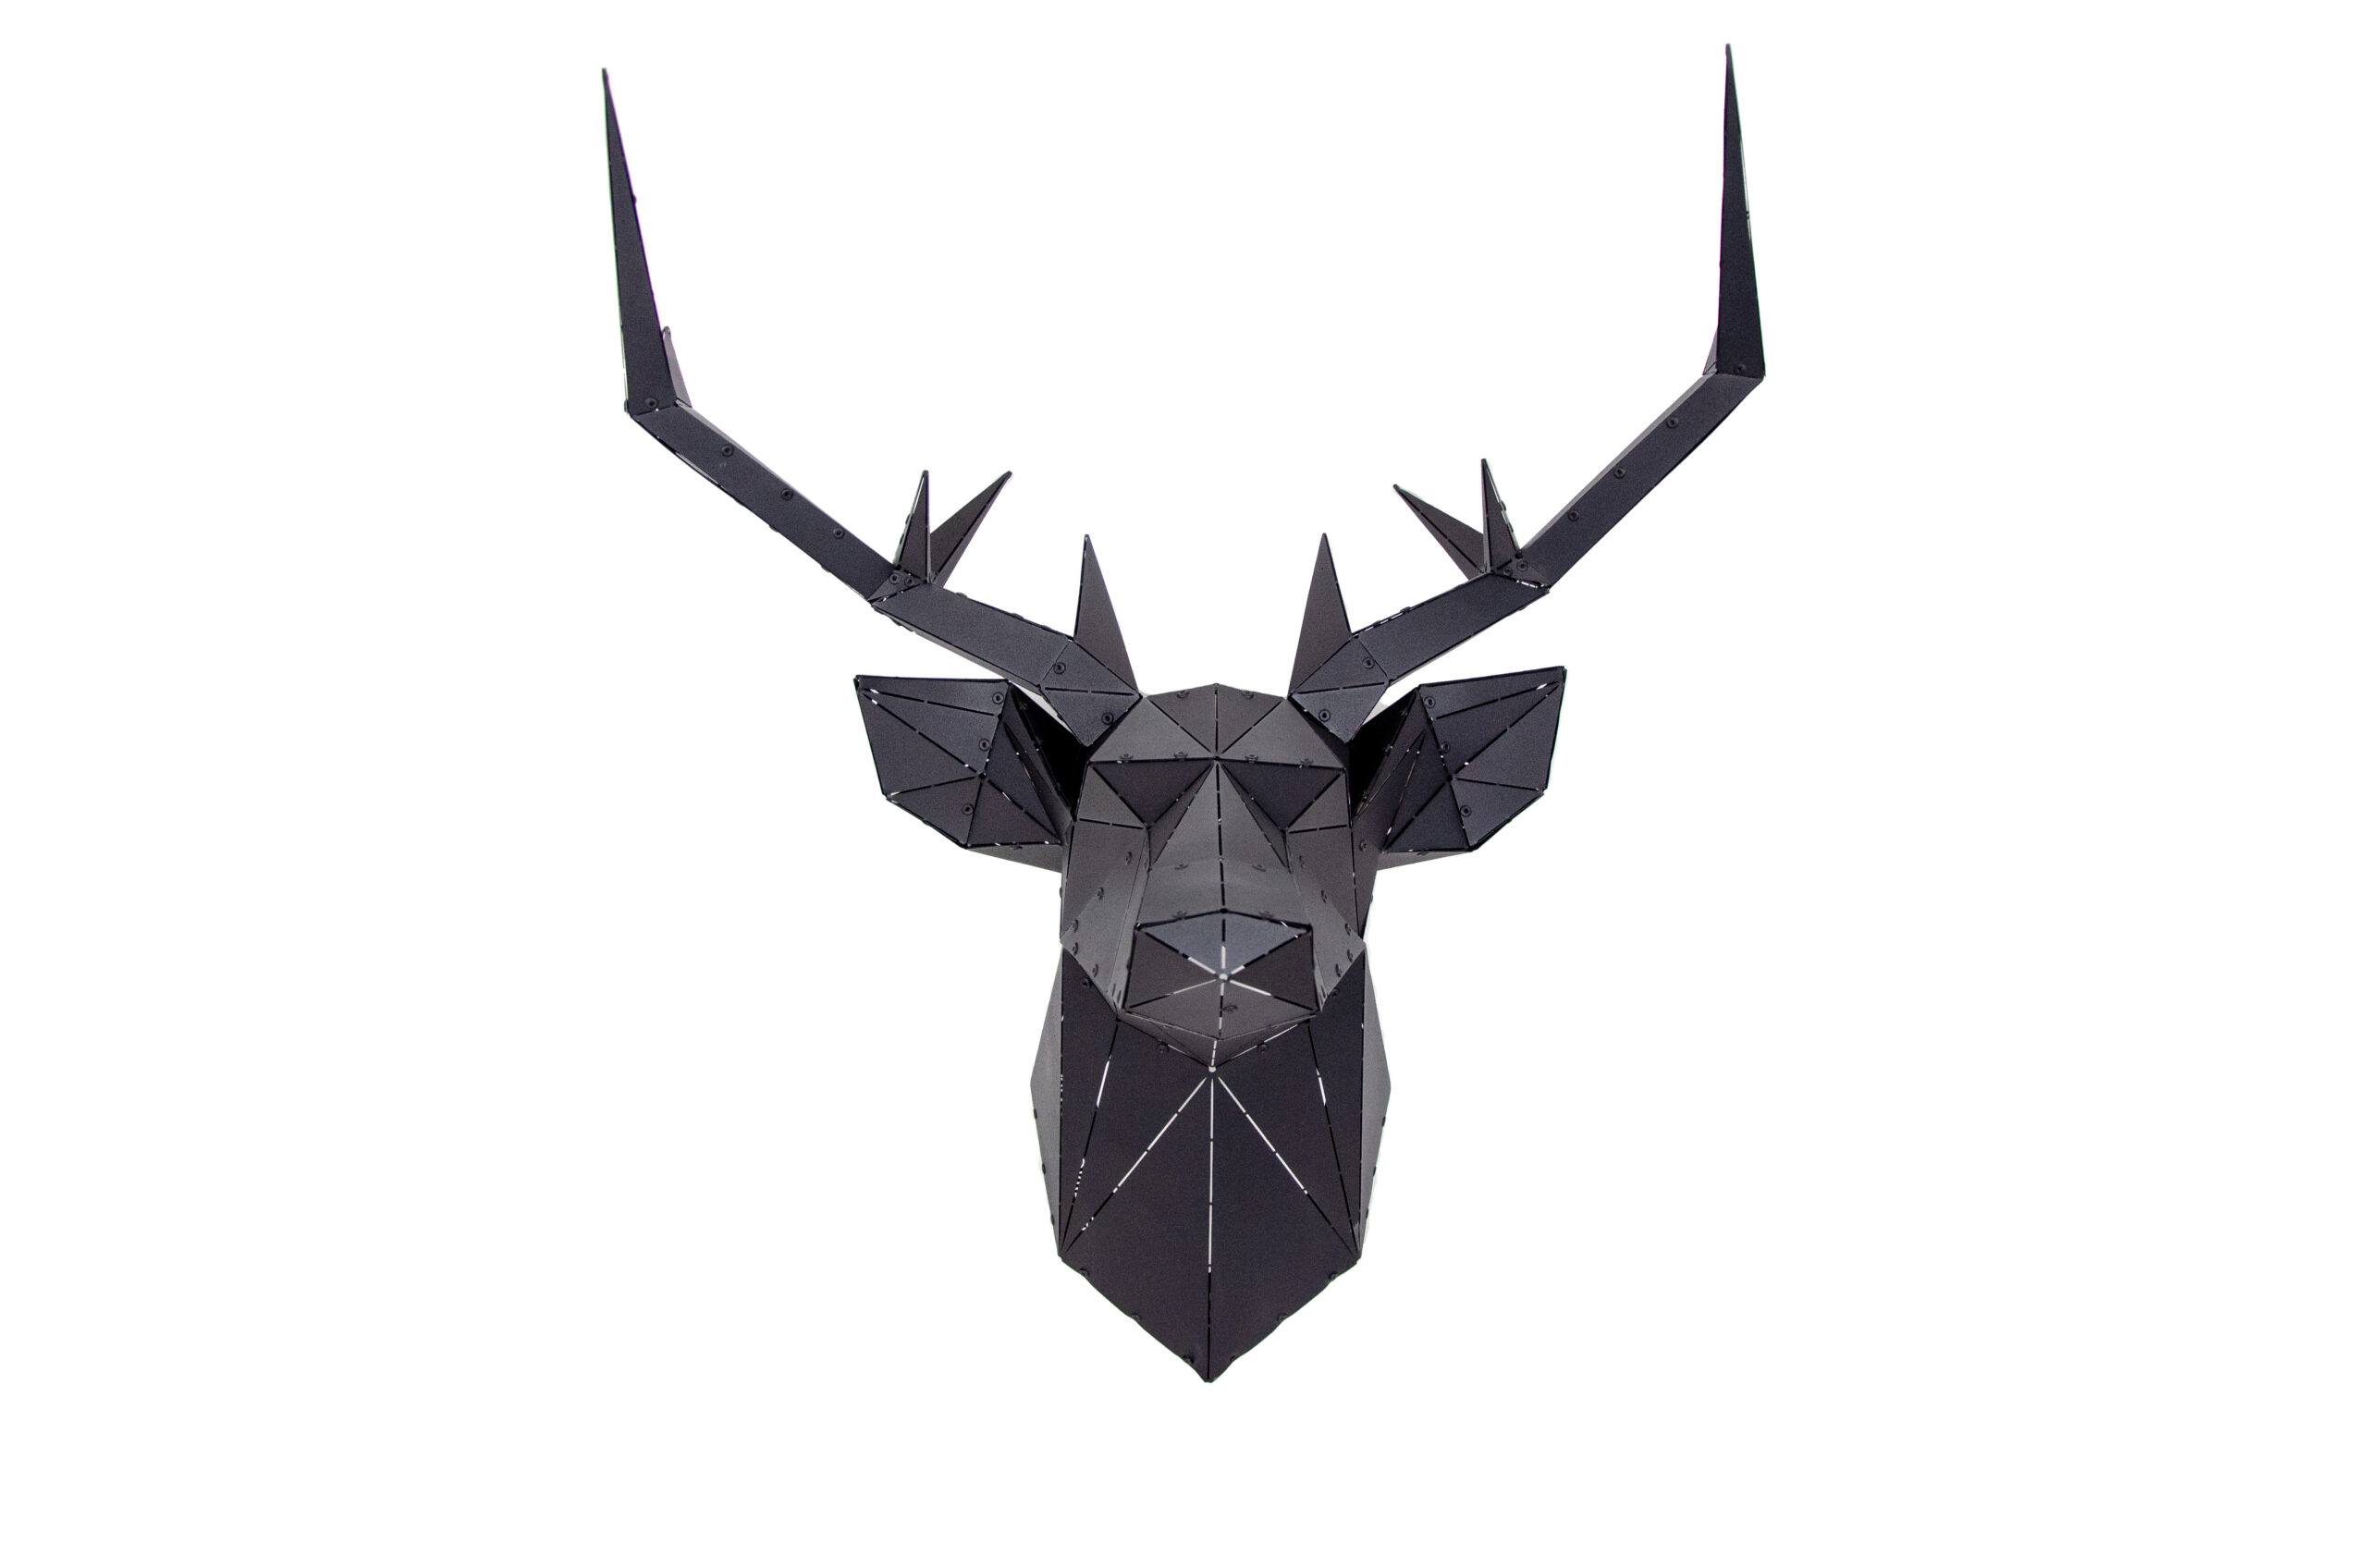 3D Metal Geometric Deer Head Wall Decor - Berling Design